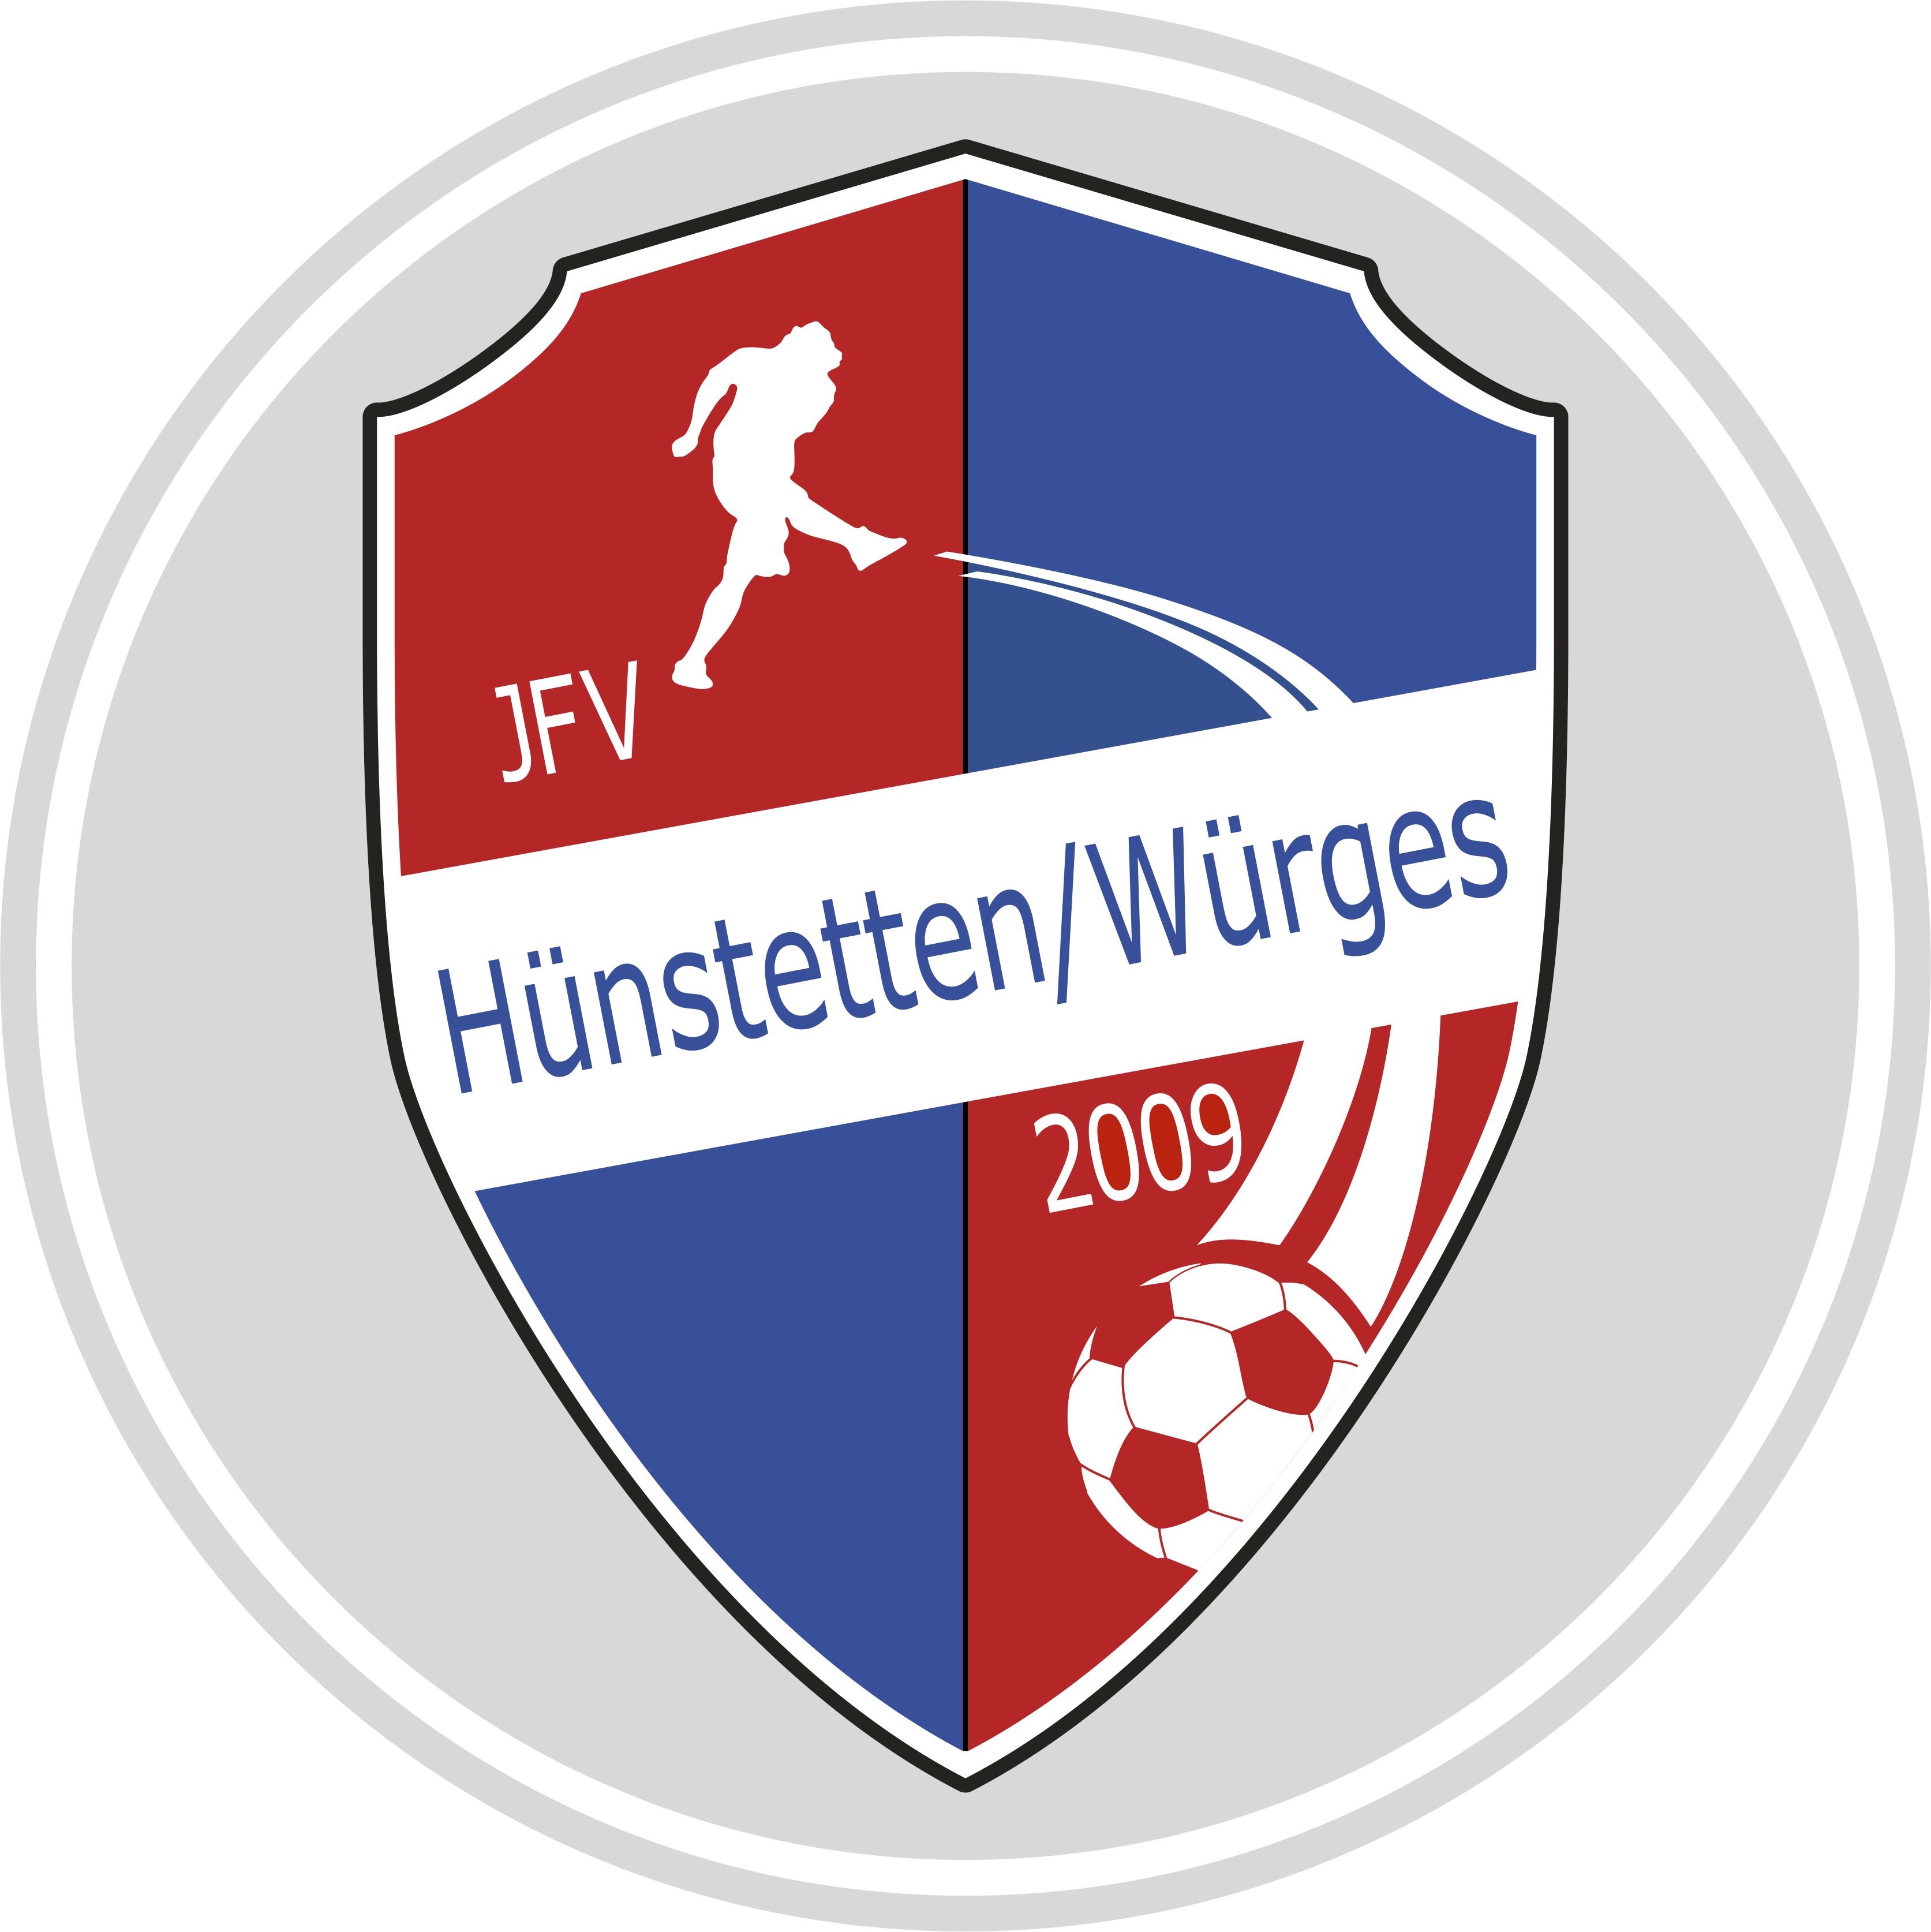 JFV Hünstetten/Würges Logo